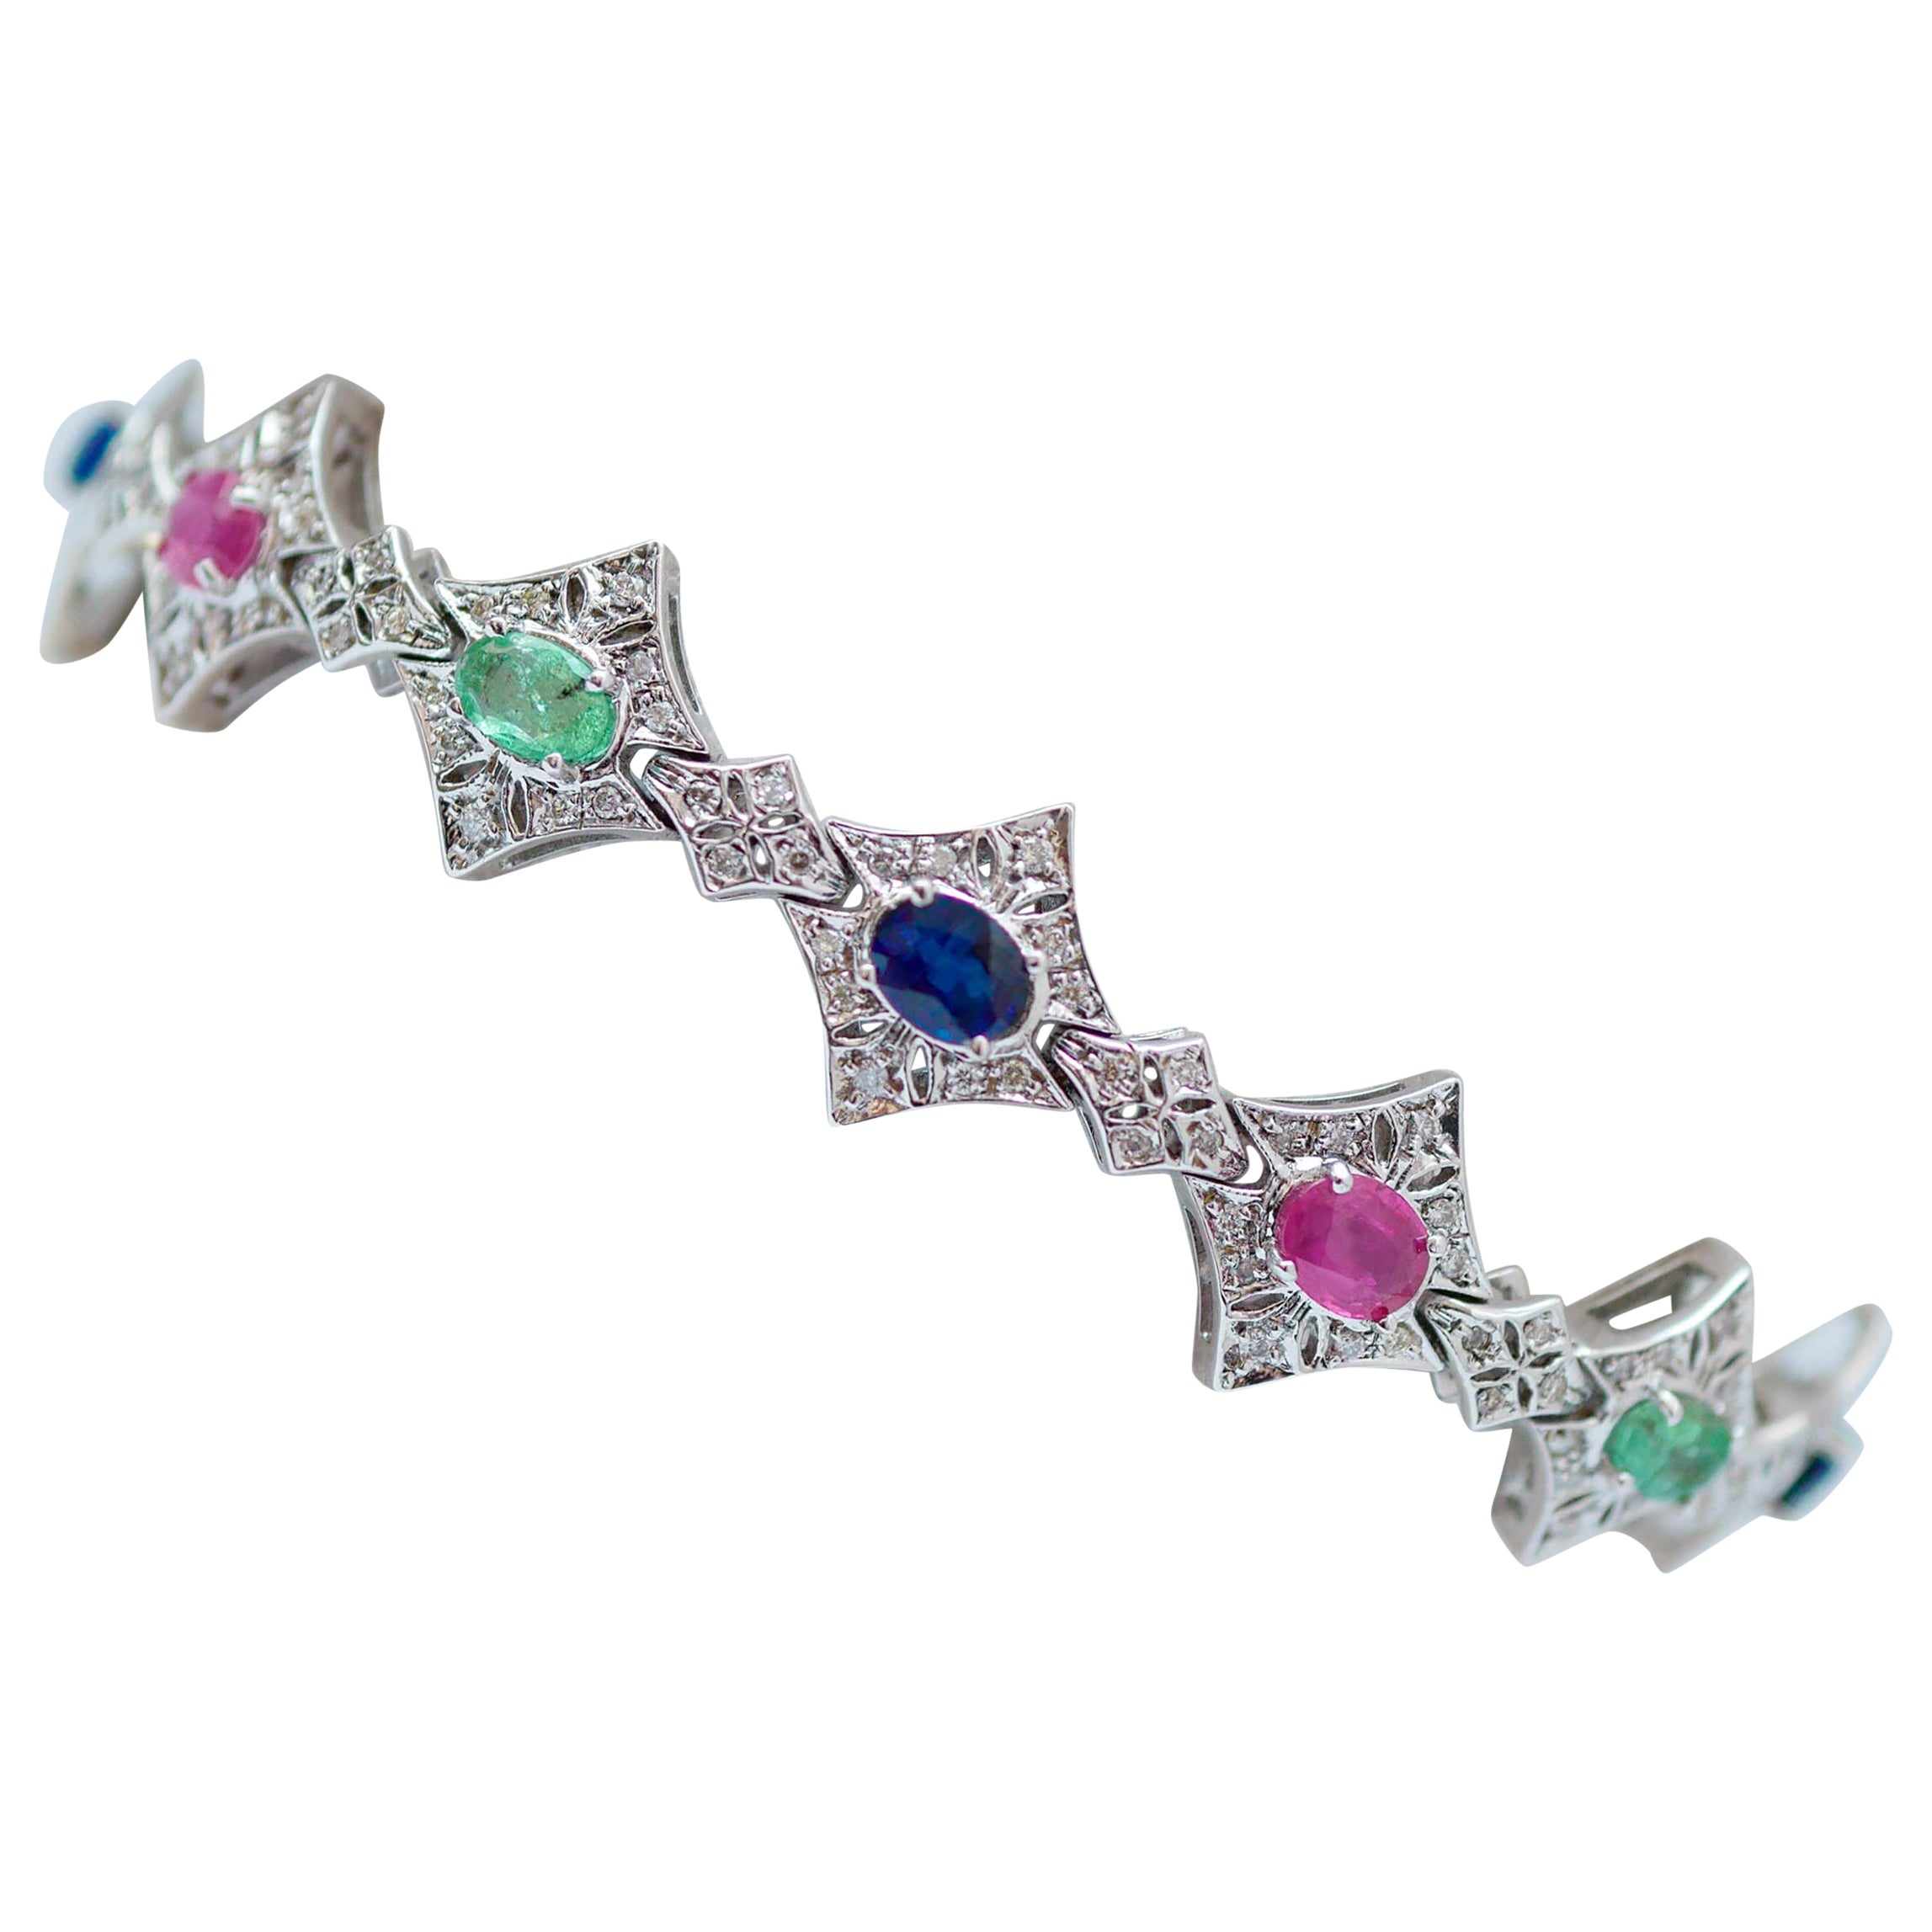 Emeralds, Rubies, Sapphires, Diamonds, 14 Karat White Gold Bracelet. For Sale